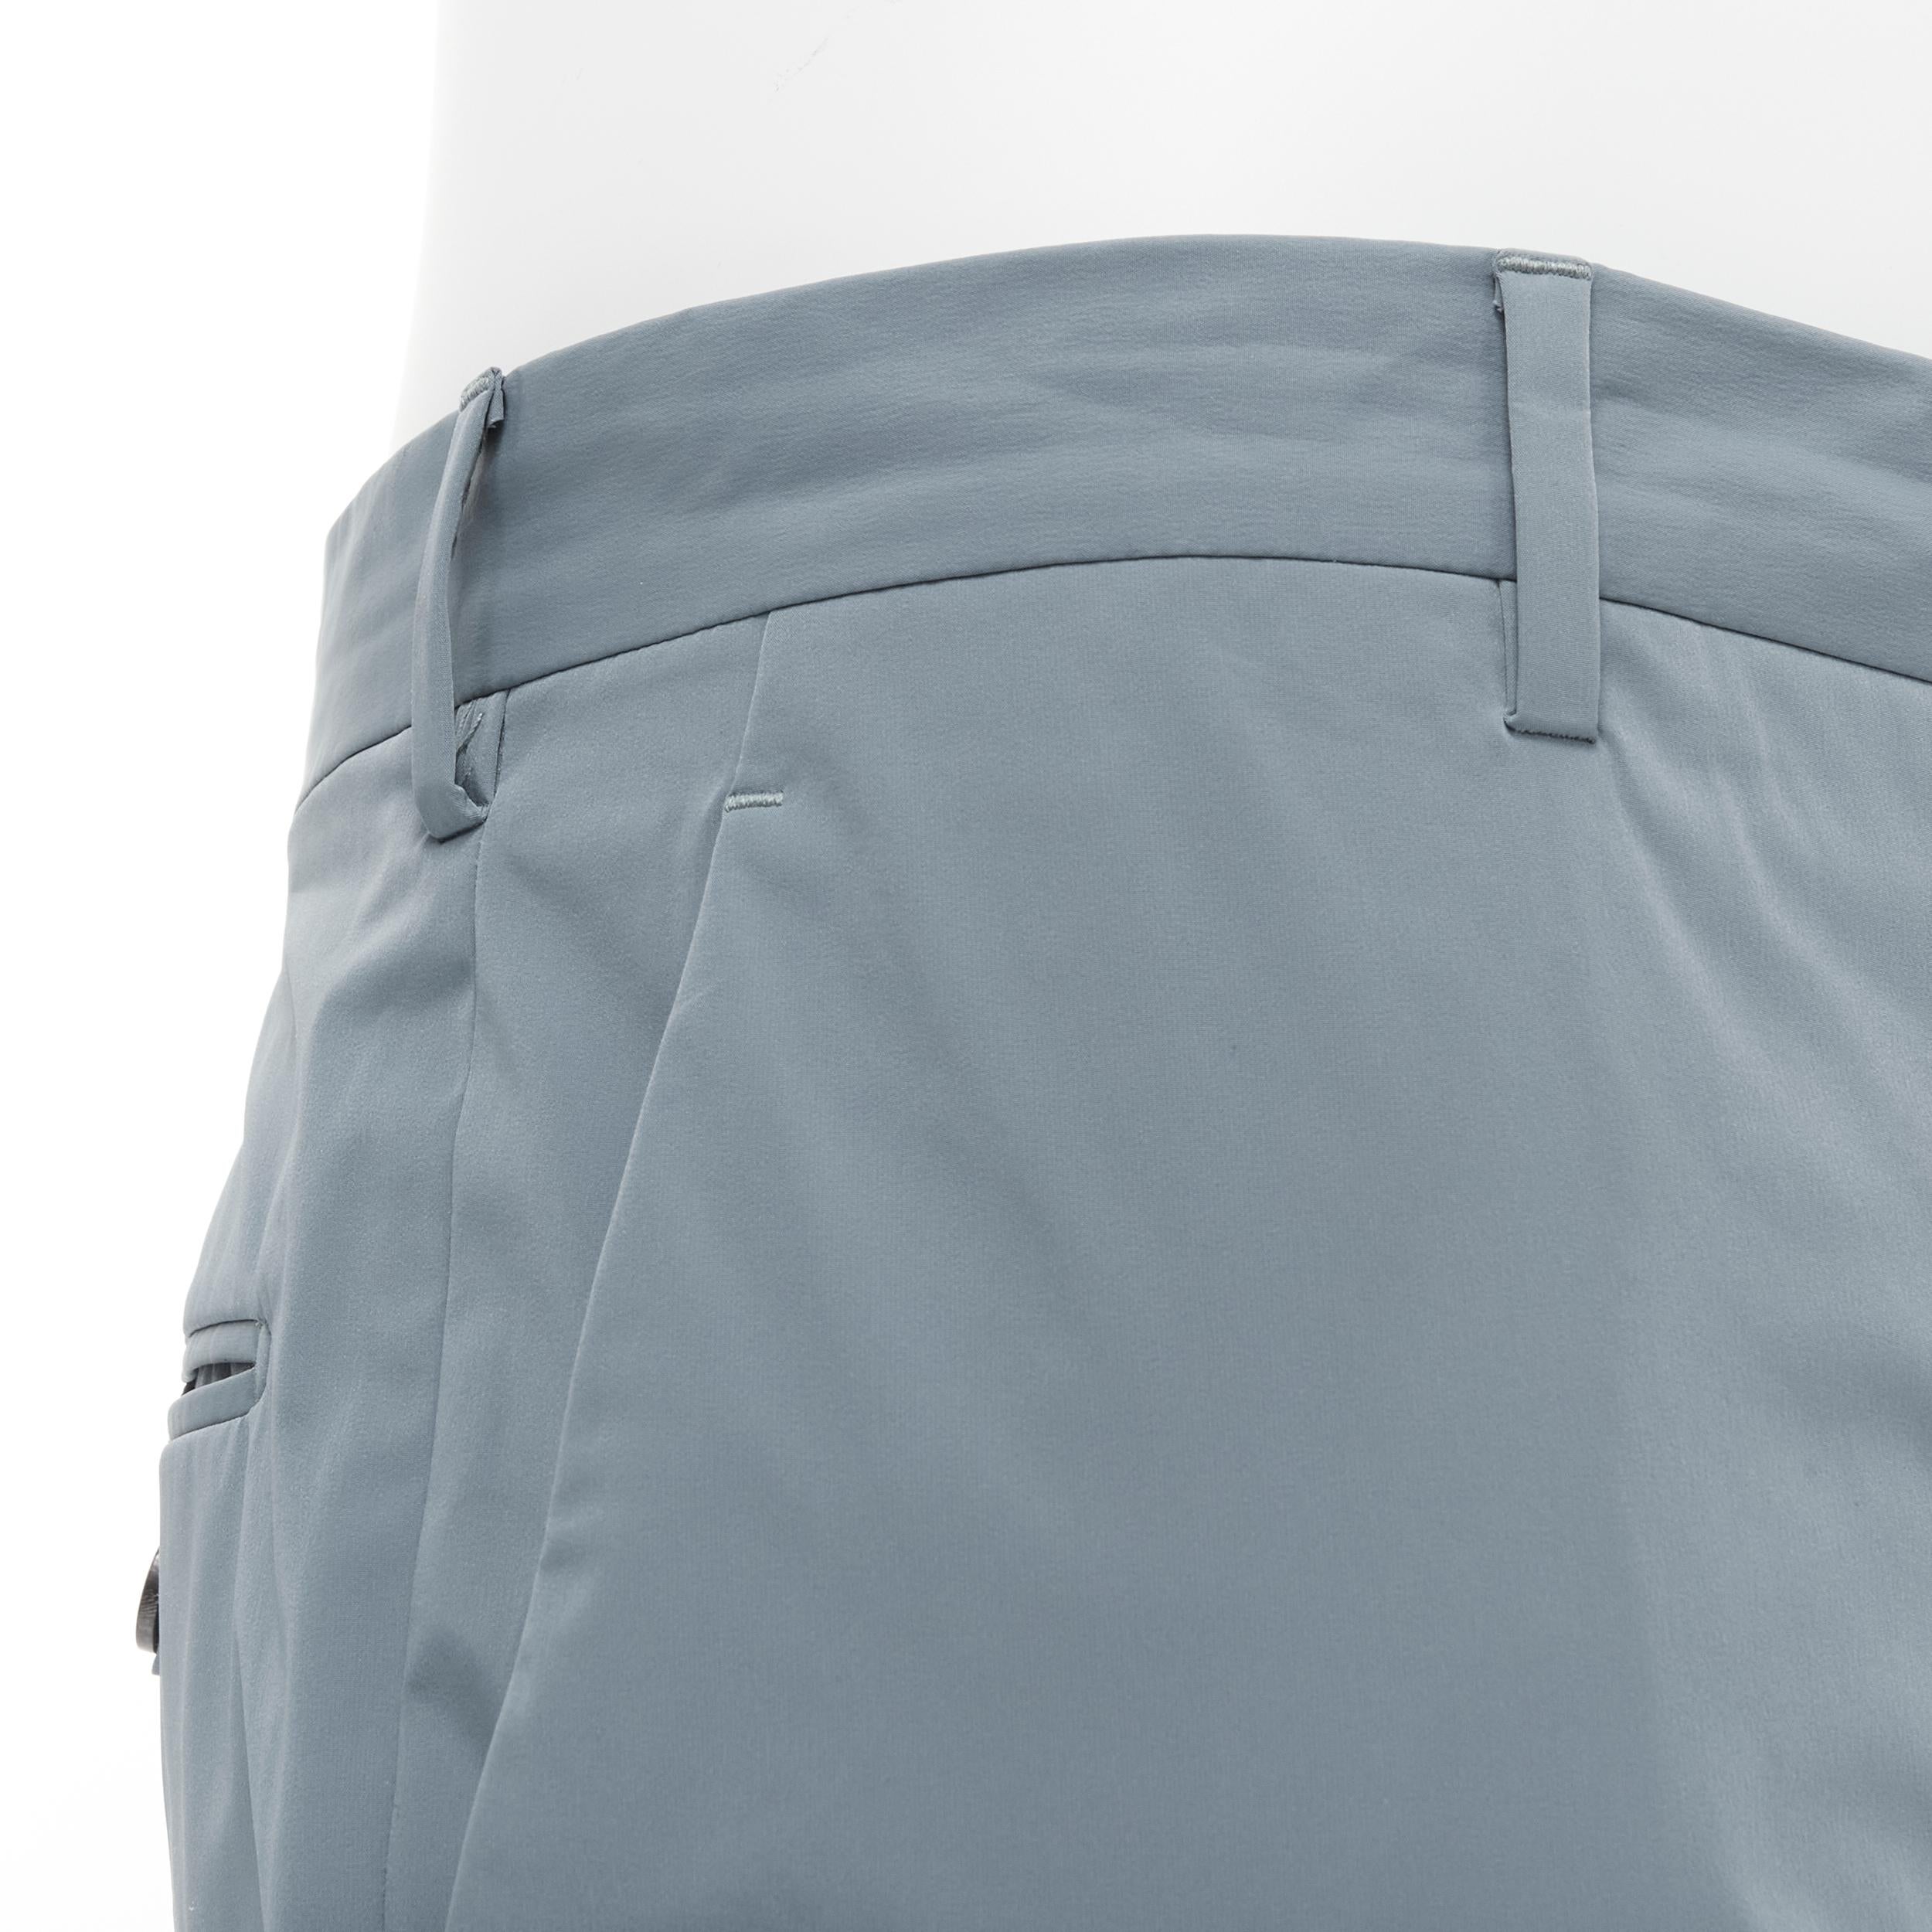 PRADA 2017 teal blue polyester blend logo tag back pocket trousers pants IT48 M 1